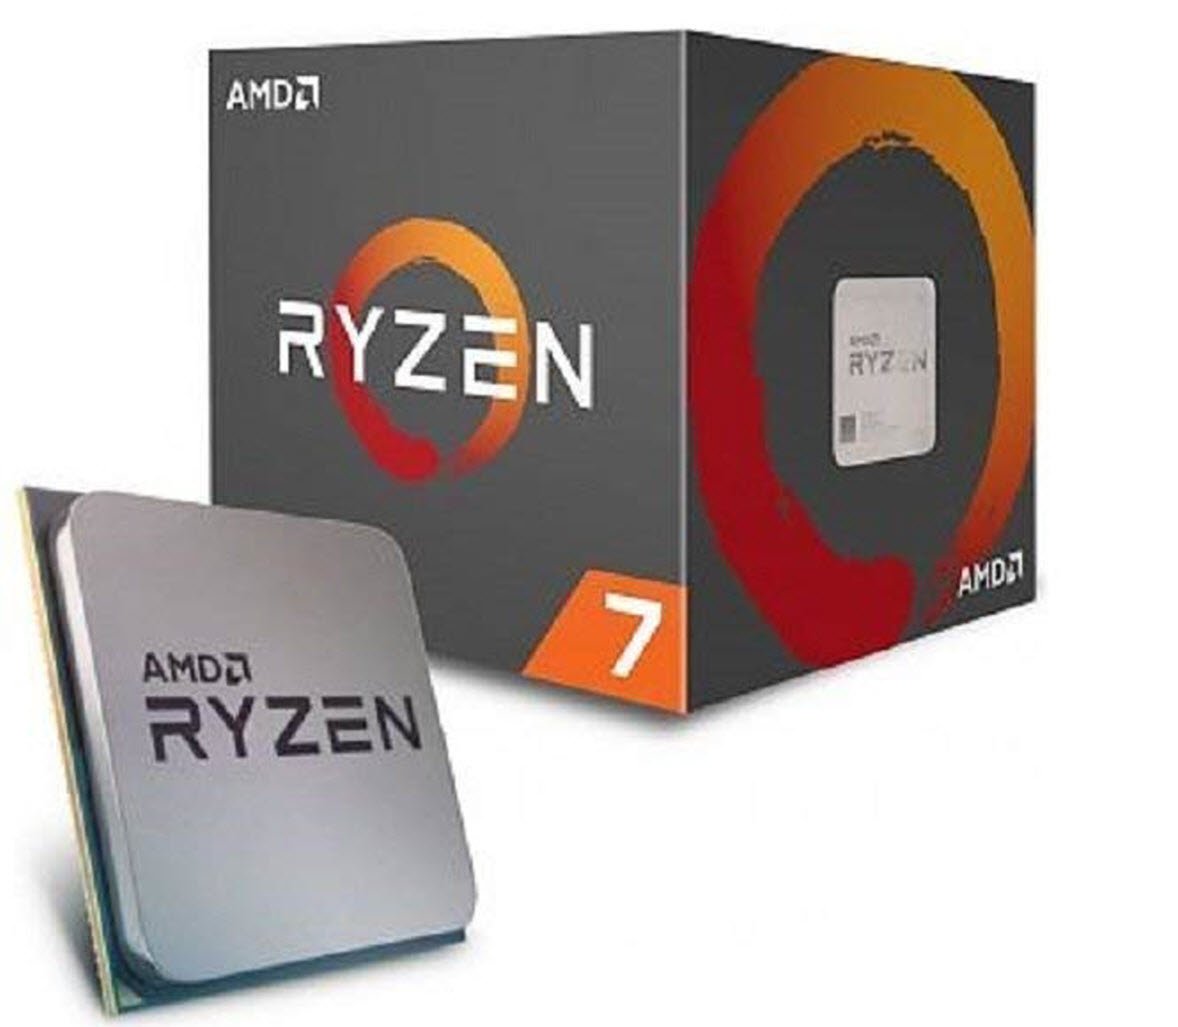 AMD Ryzen 7 1700 Processor with Wraith Spire LED Cooler and GIGABYTE AORUS GA-AX370-Gaming 5 AMD Ryzen AM4 X370 RGB FUSION SMART FAN 5